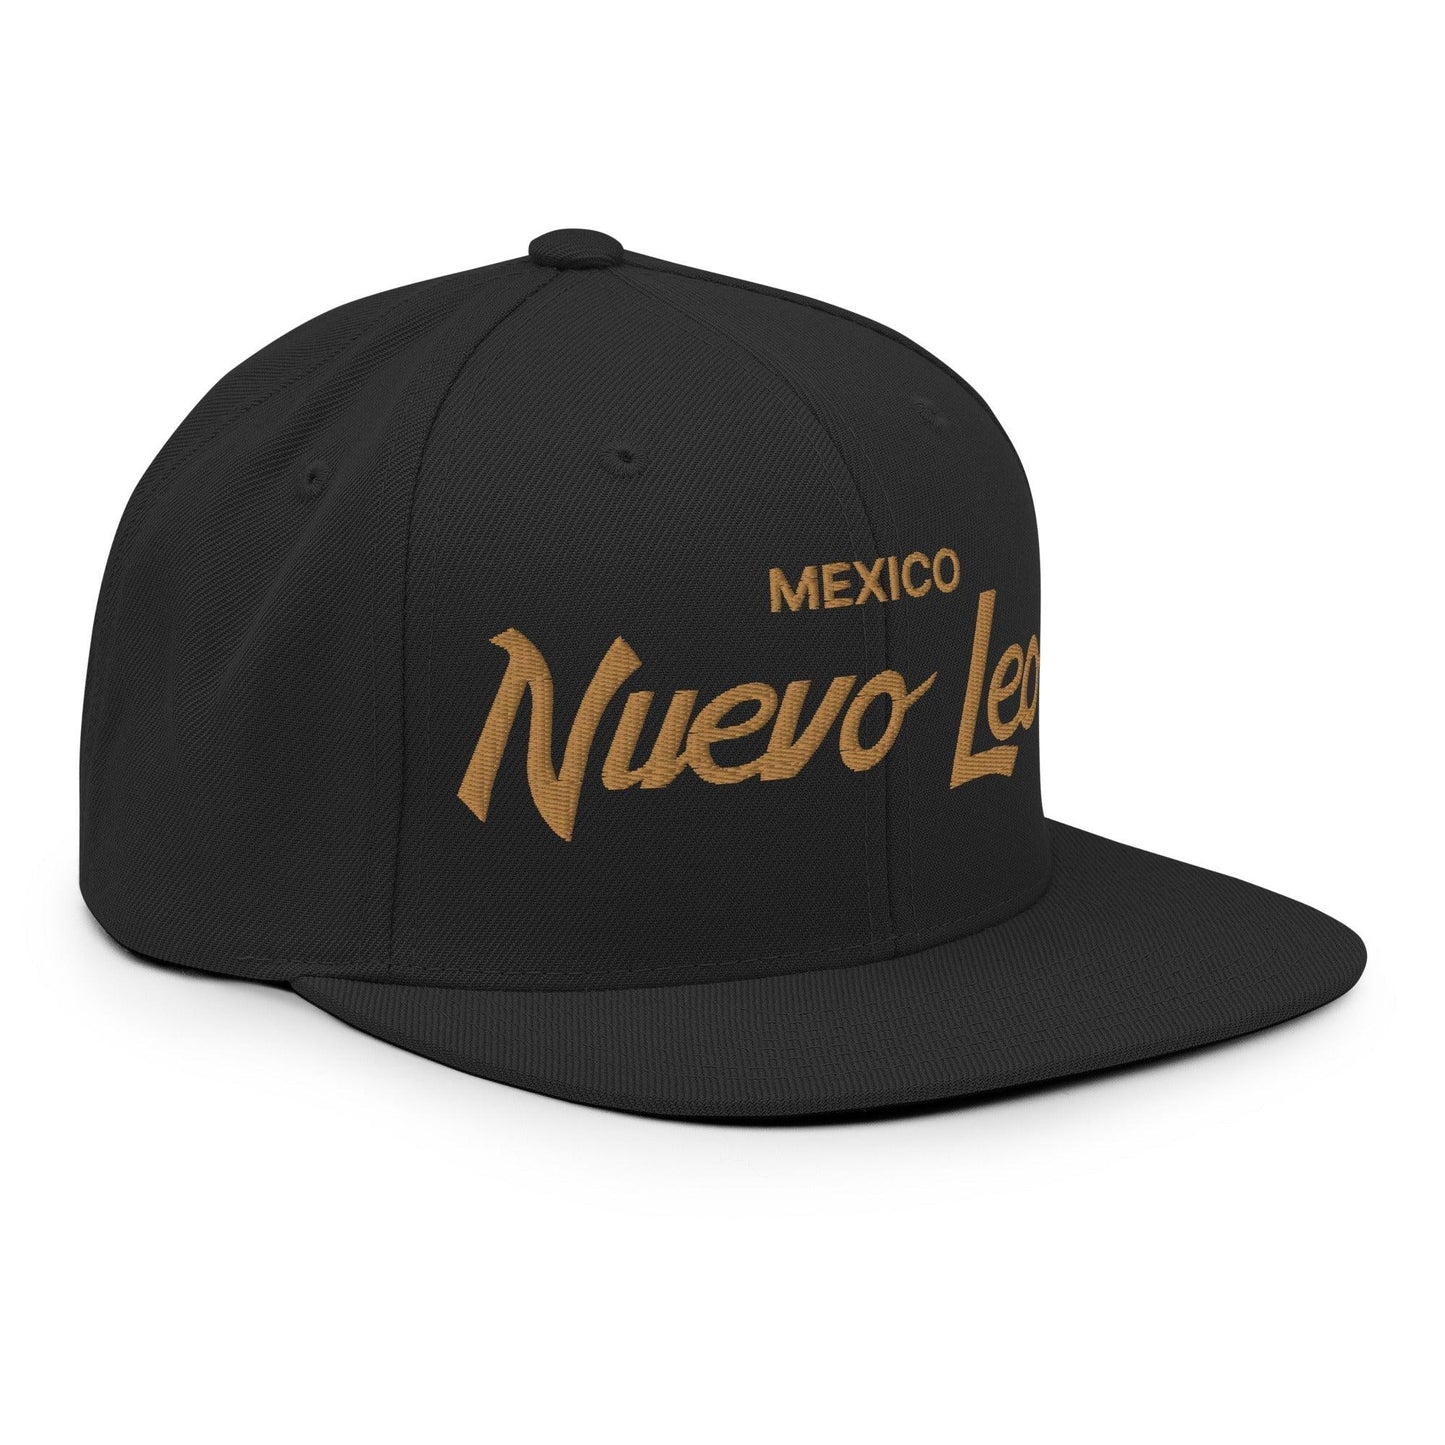 Nuevo Leon Mexico Gold Vintage Sports Script Snapback Hat Black